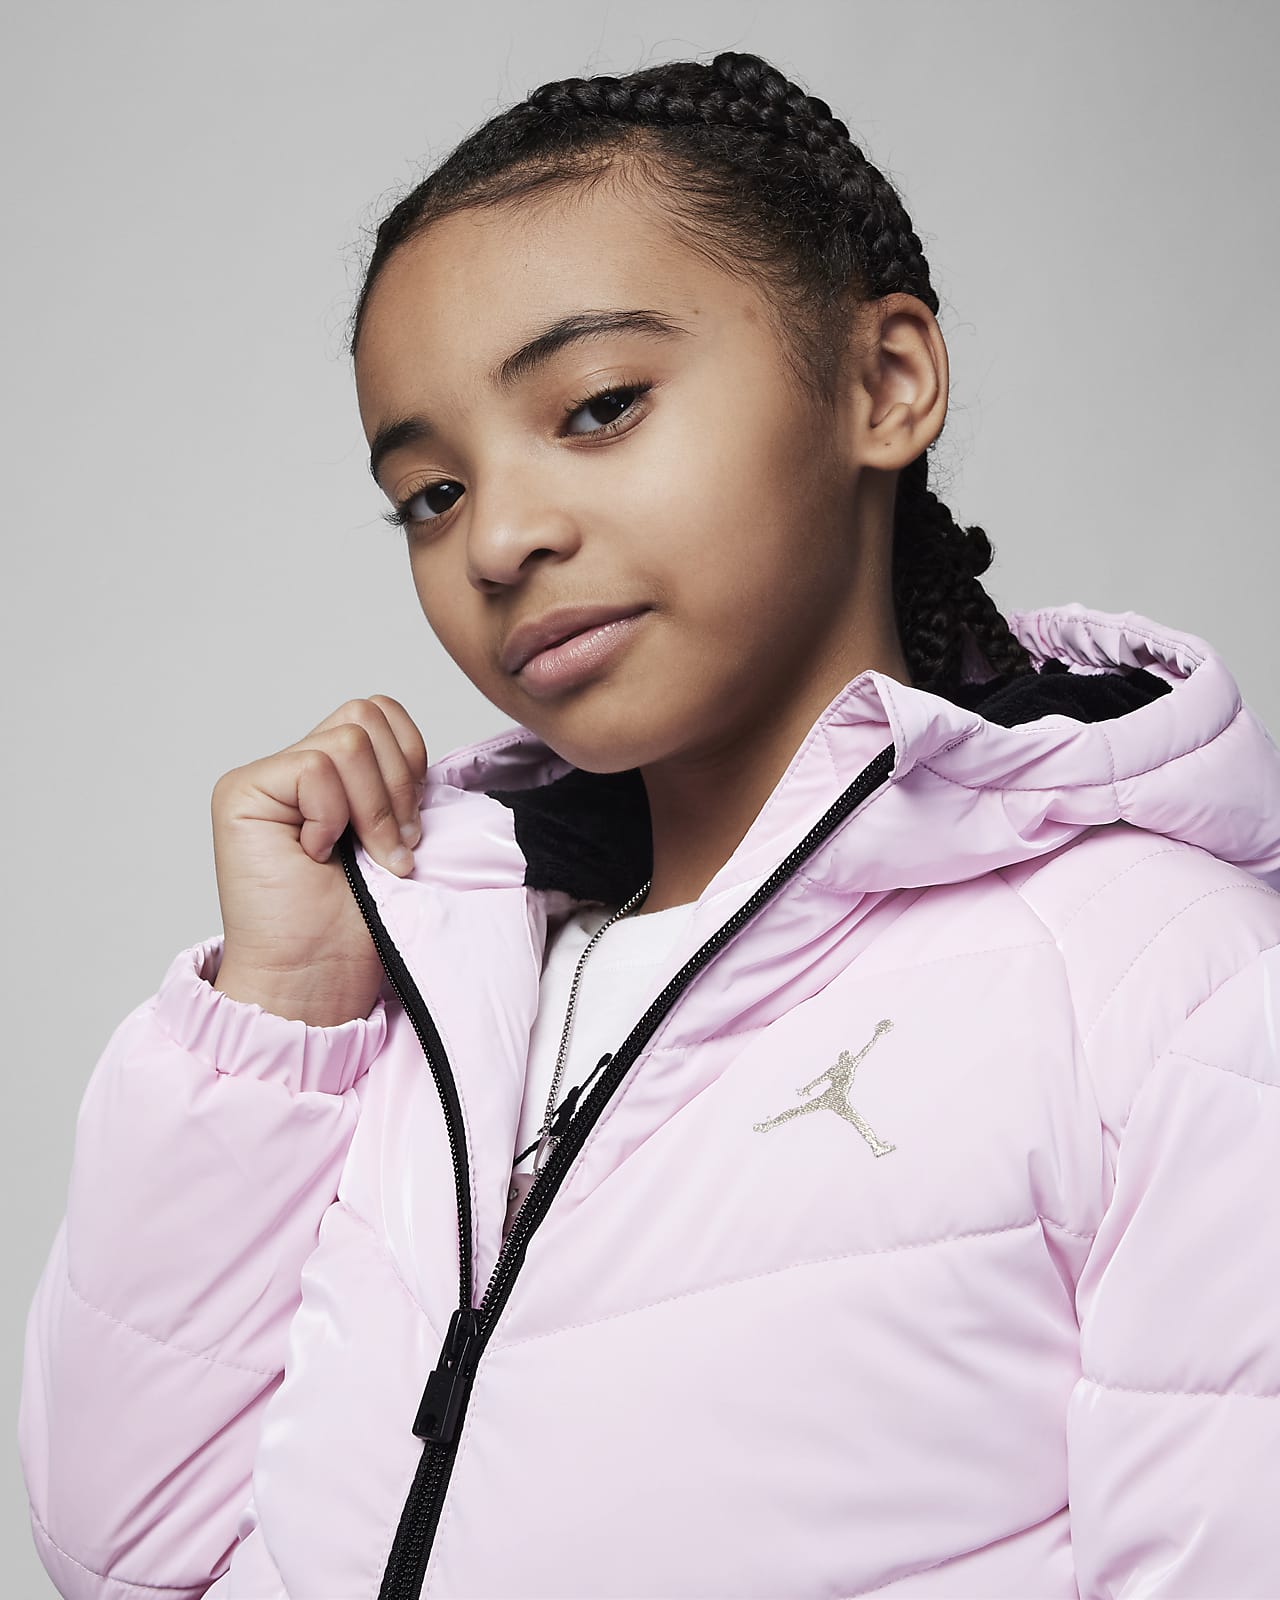 Jordan Shiny Chevron Quilting Jacket Little Kids' Jacket. Nike.com